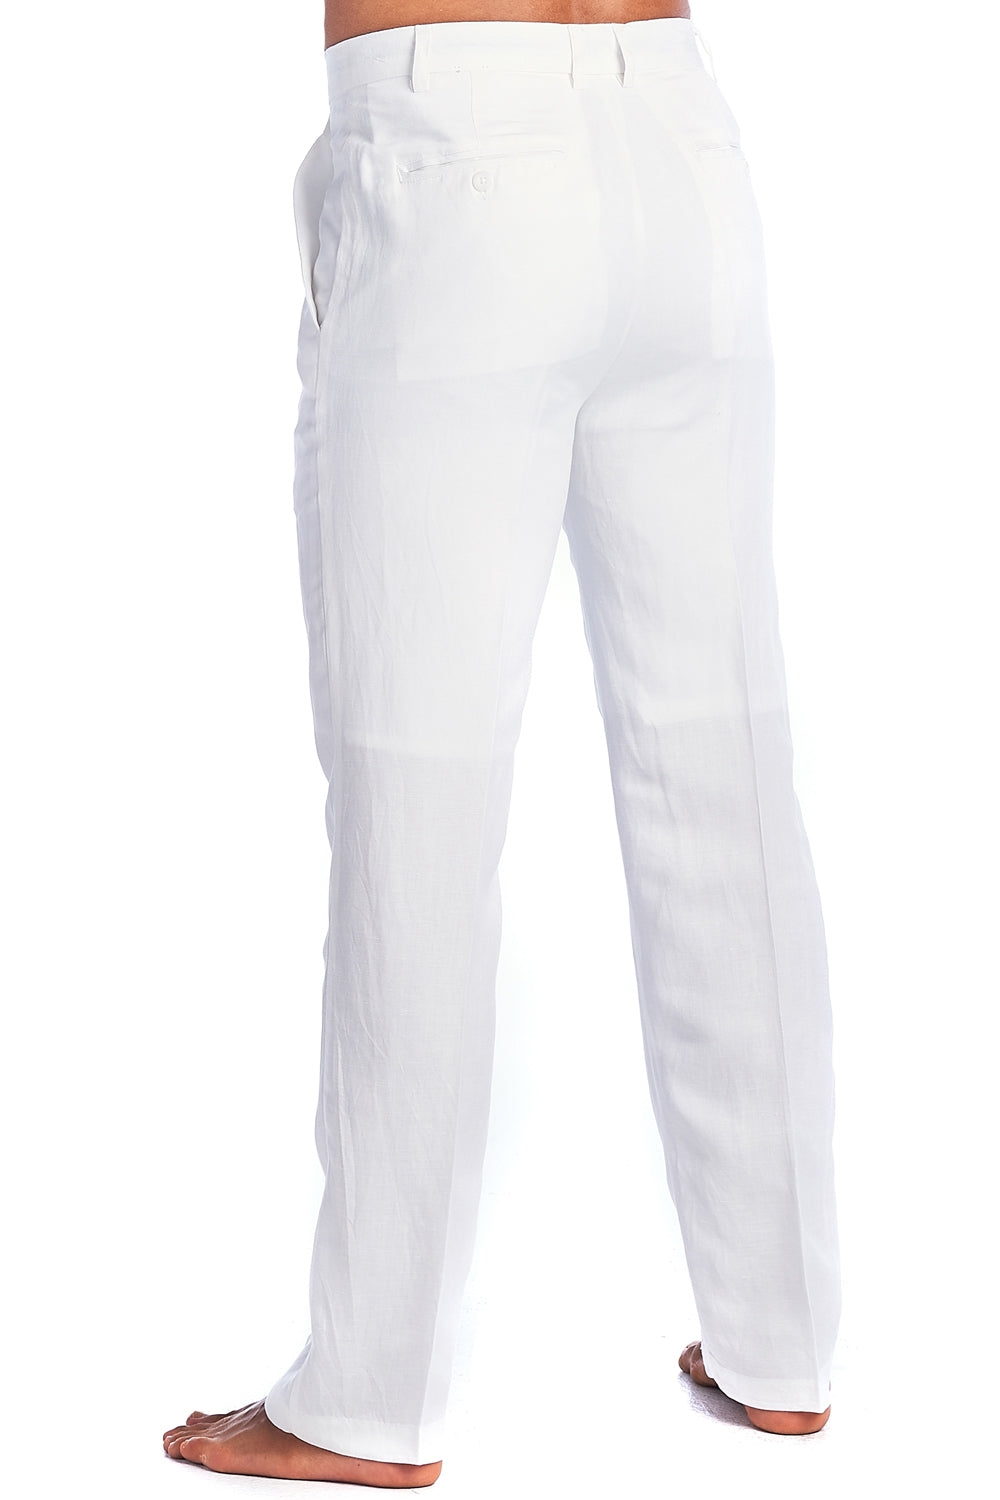 Slim Fit Plain Star Denim Jeans, White at Rs 500/piece in New Delhi | ID:  2849953035055